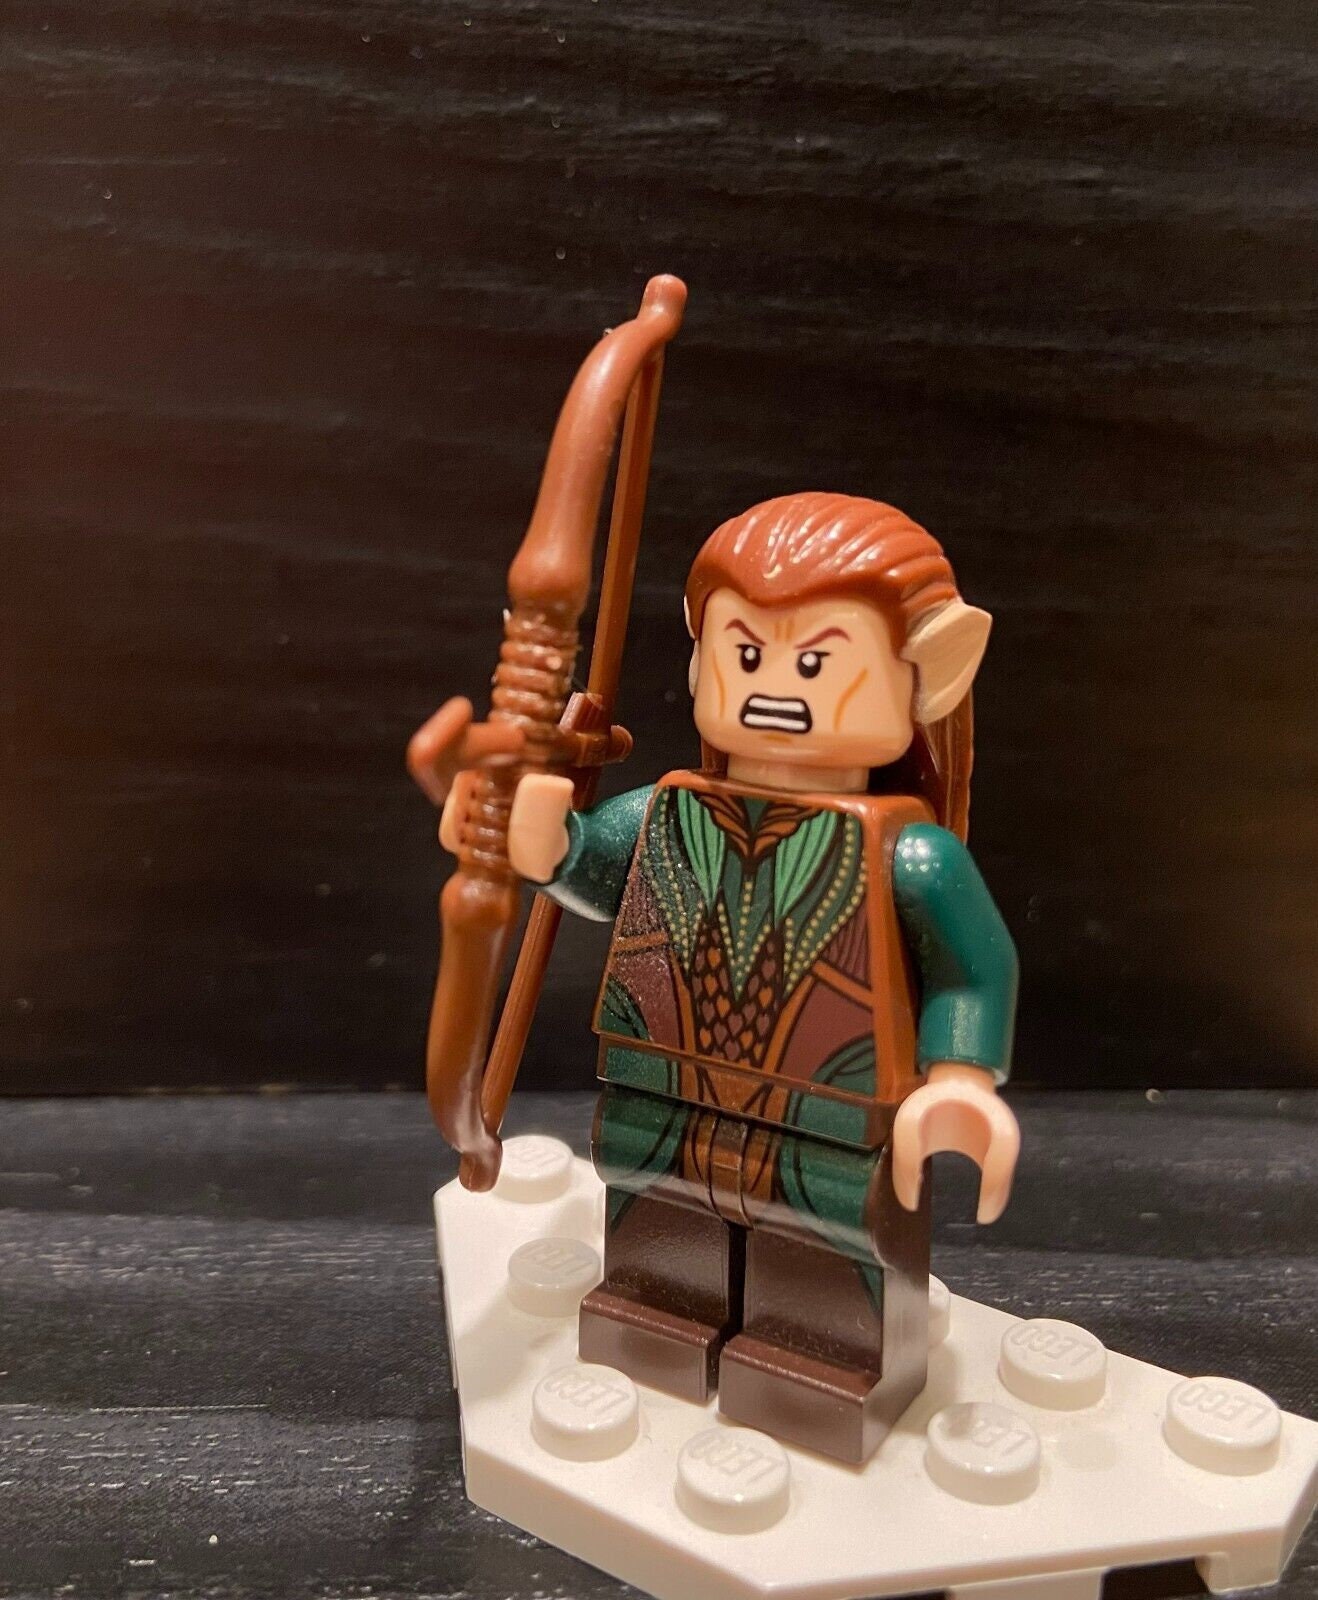 Lego MINIFIGURE Elf Hobbit Lord of the Rings Legolas Greenleaf